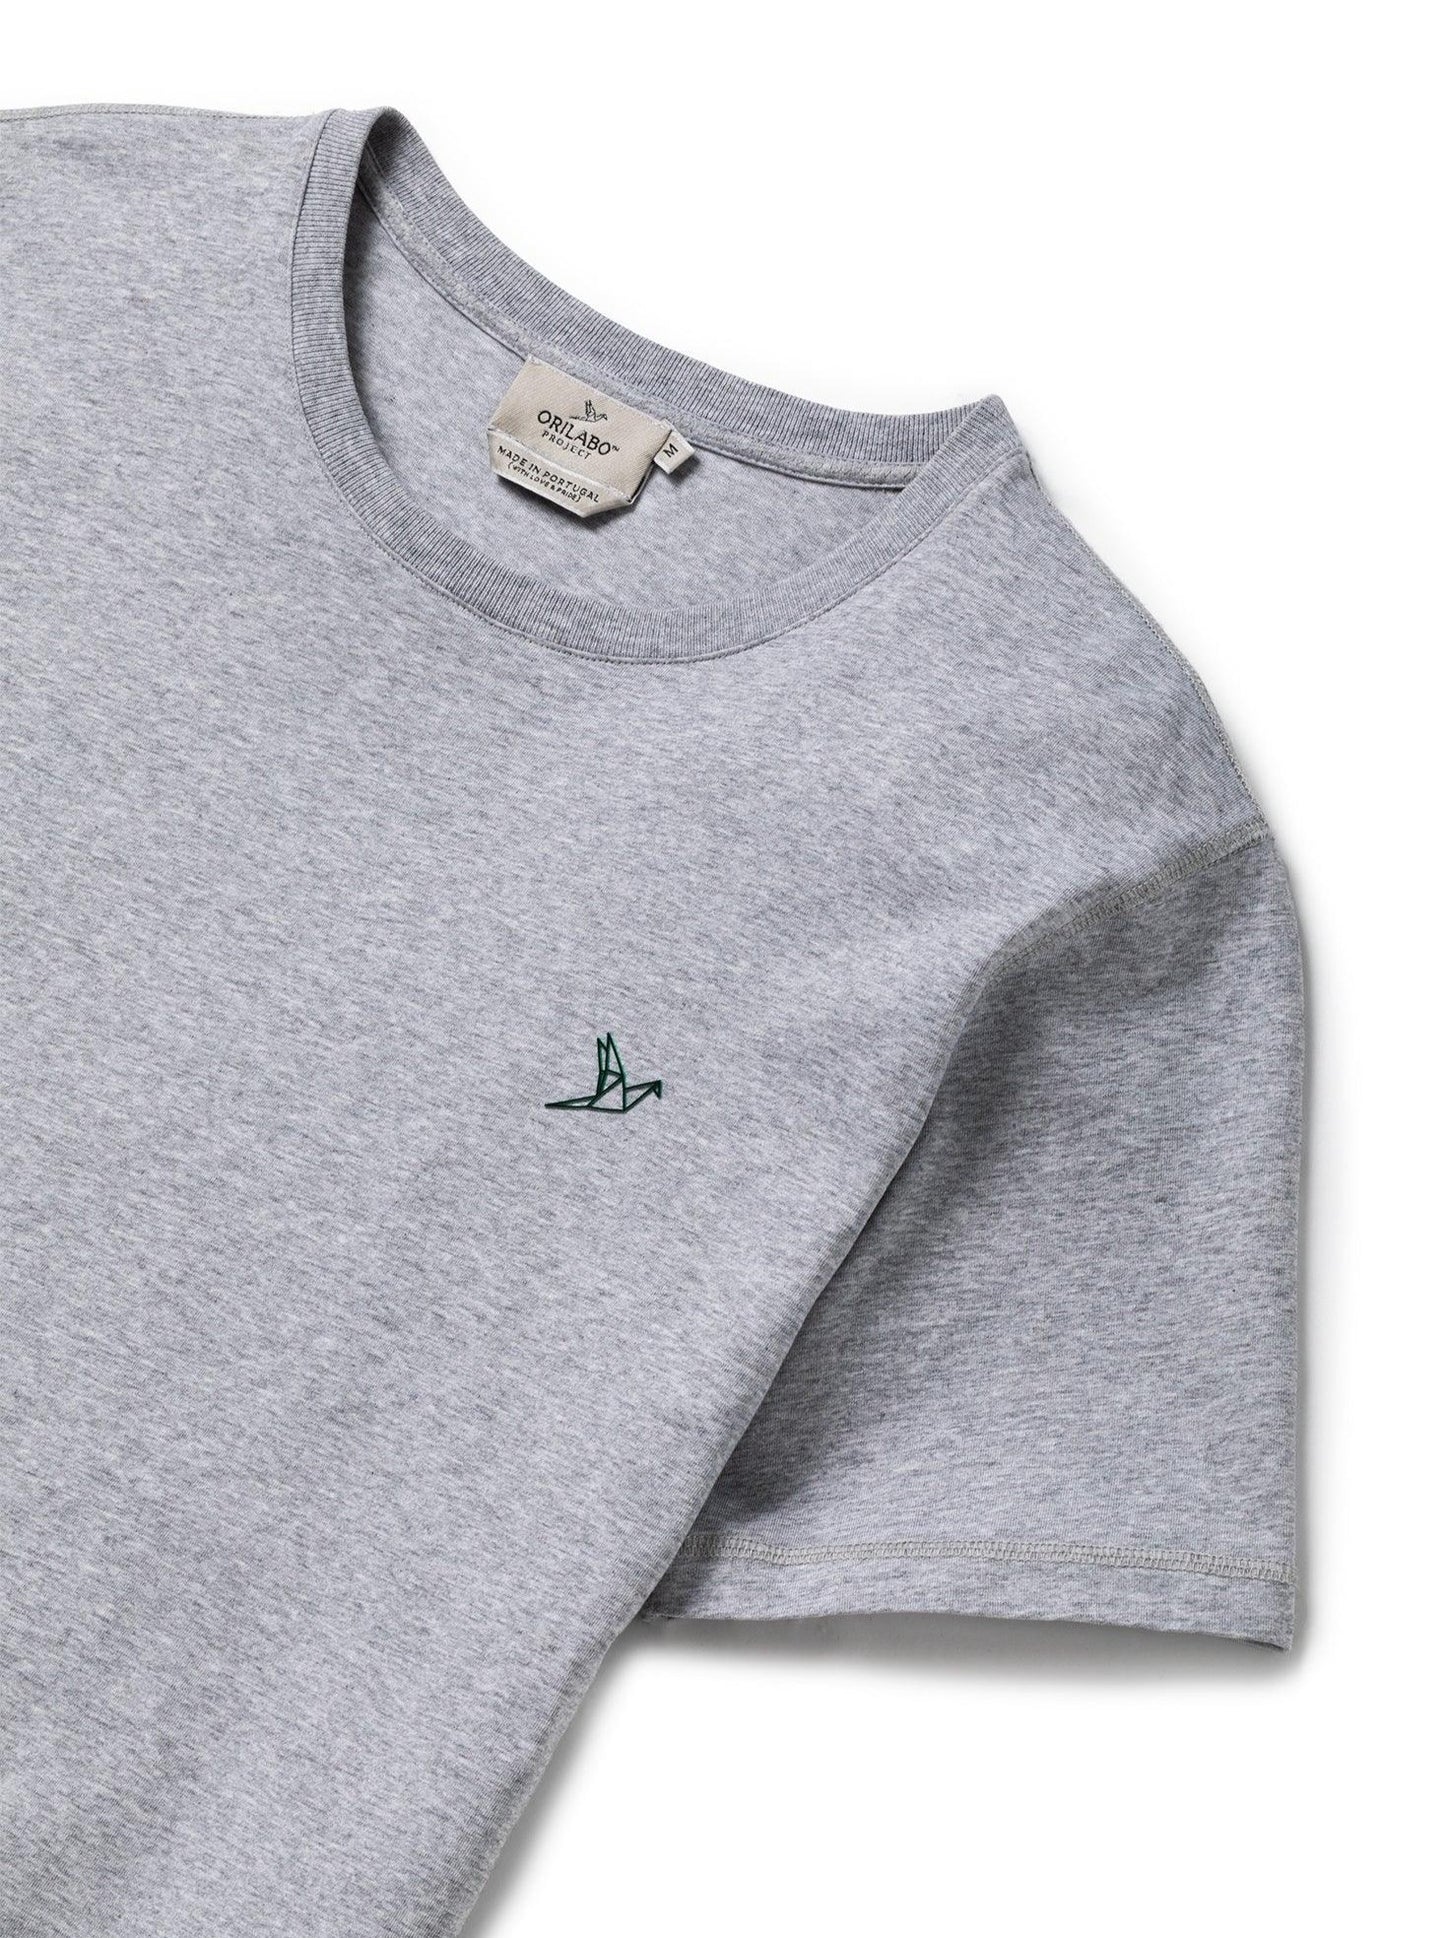 
                  
                    Men's Small Logo T-shirt - Grey - ORILABO Project
                  
                